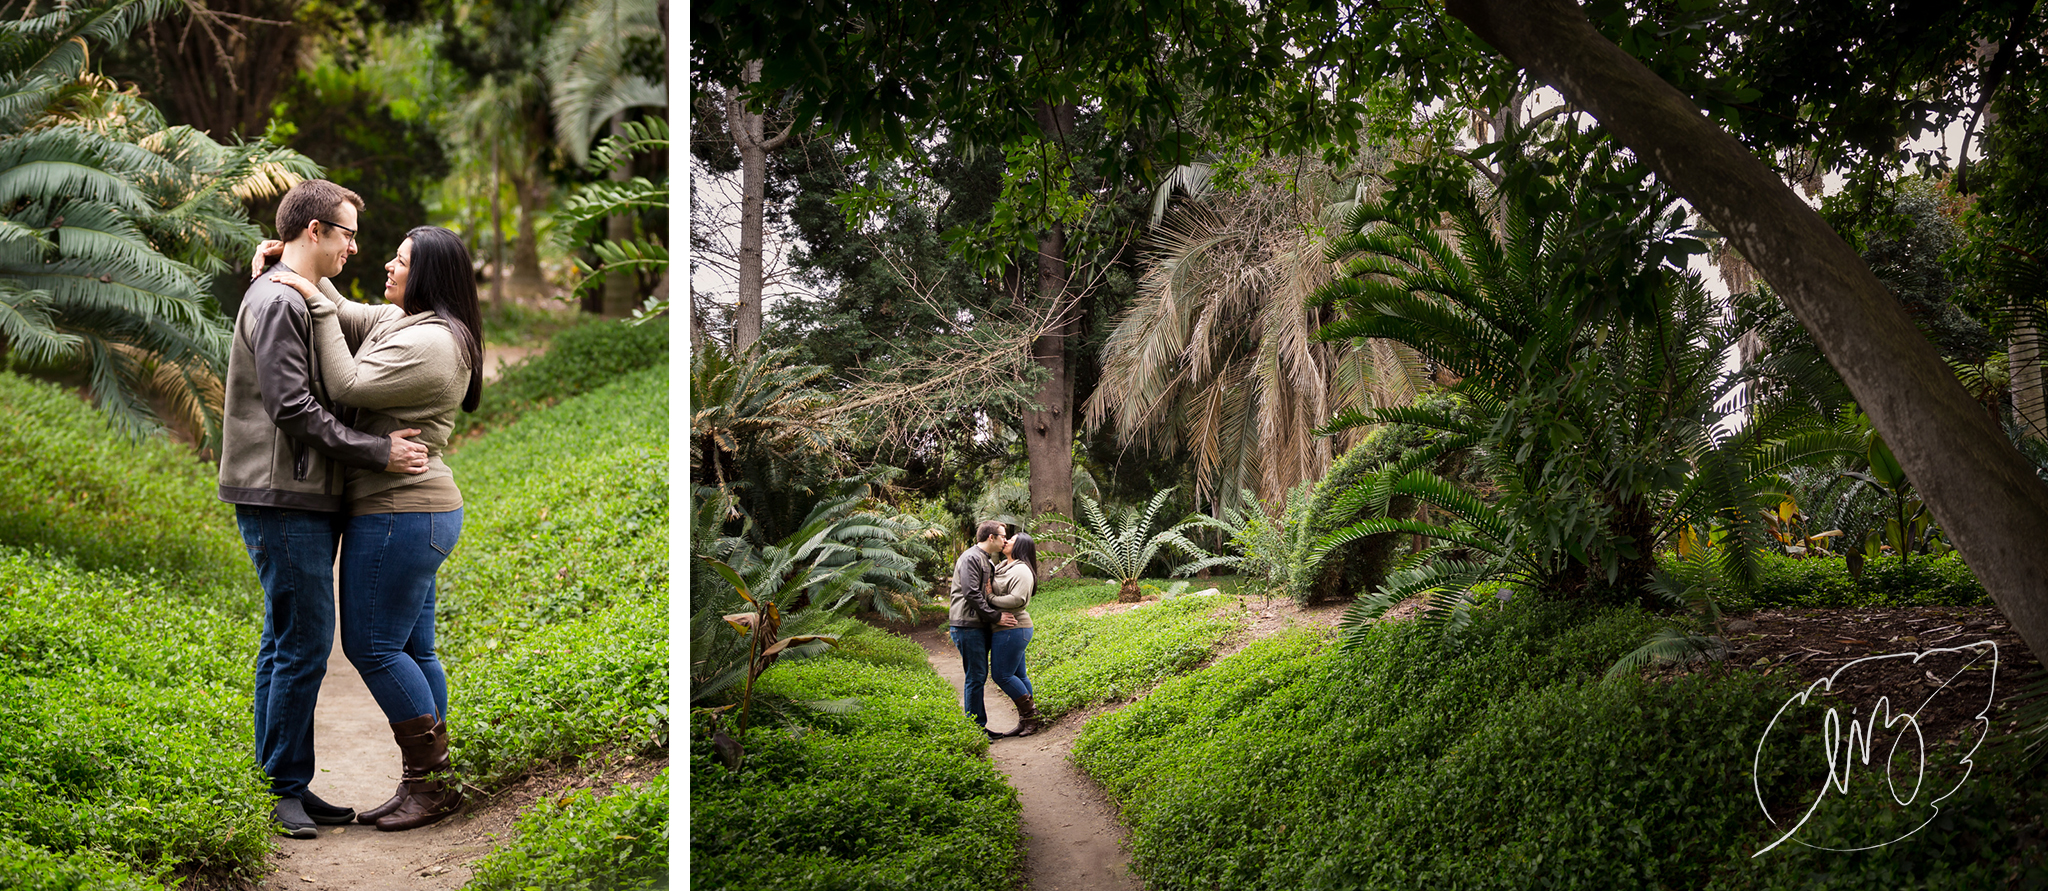 Los_Angeles_Arboretum_Engagement_Photographer_02.jpg